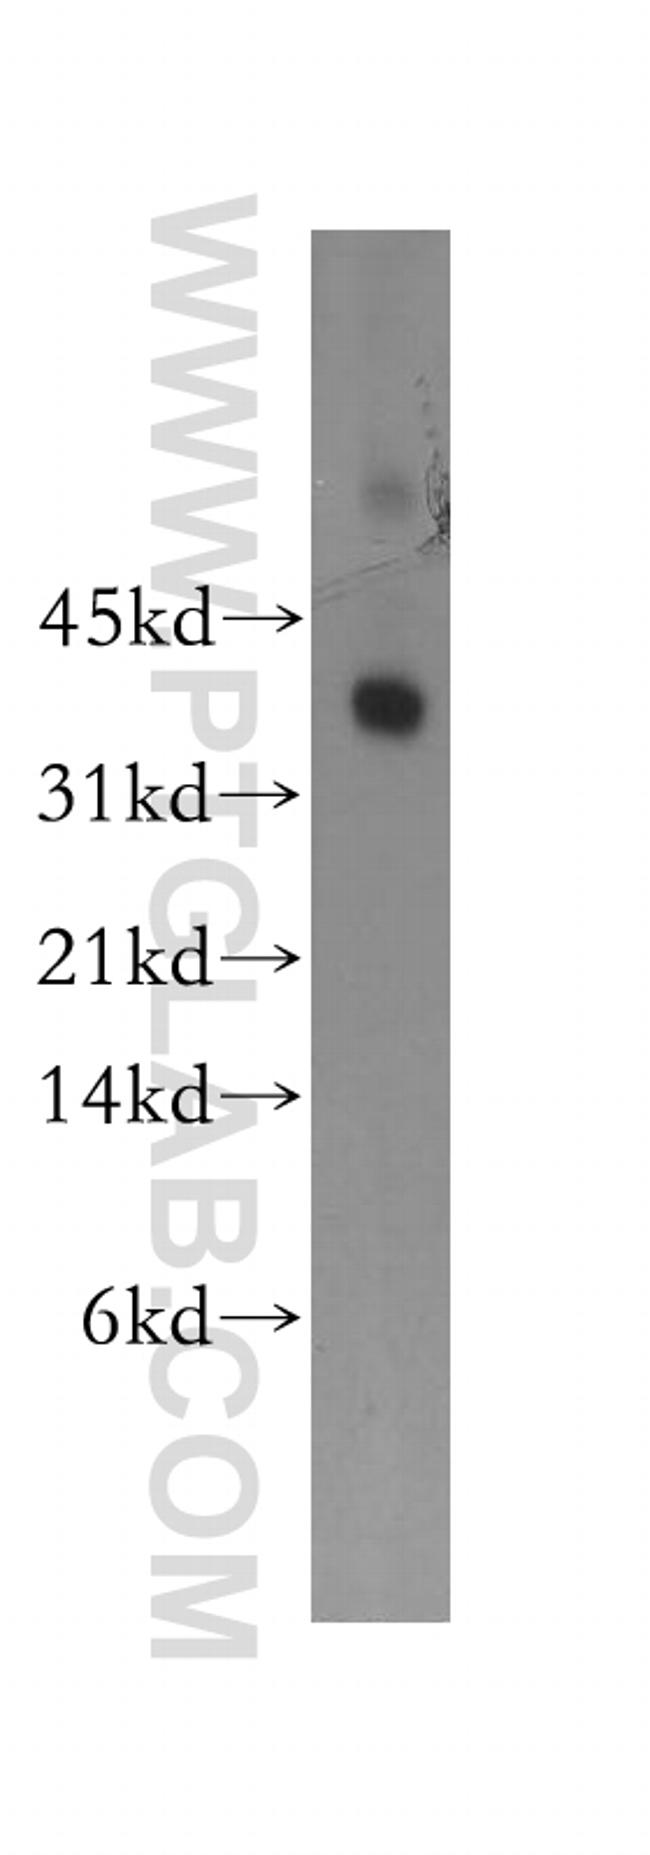 Syntaxin 11 Antibody in Western Blot (WB)